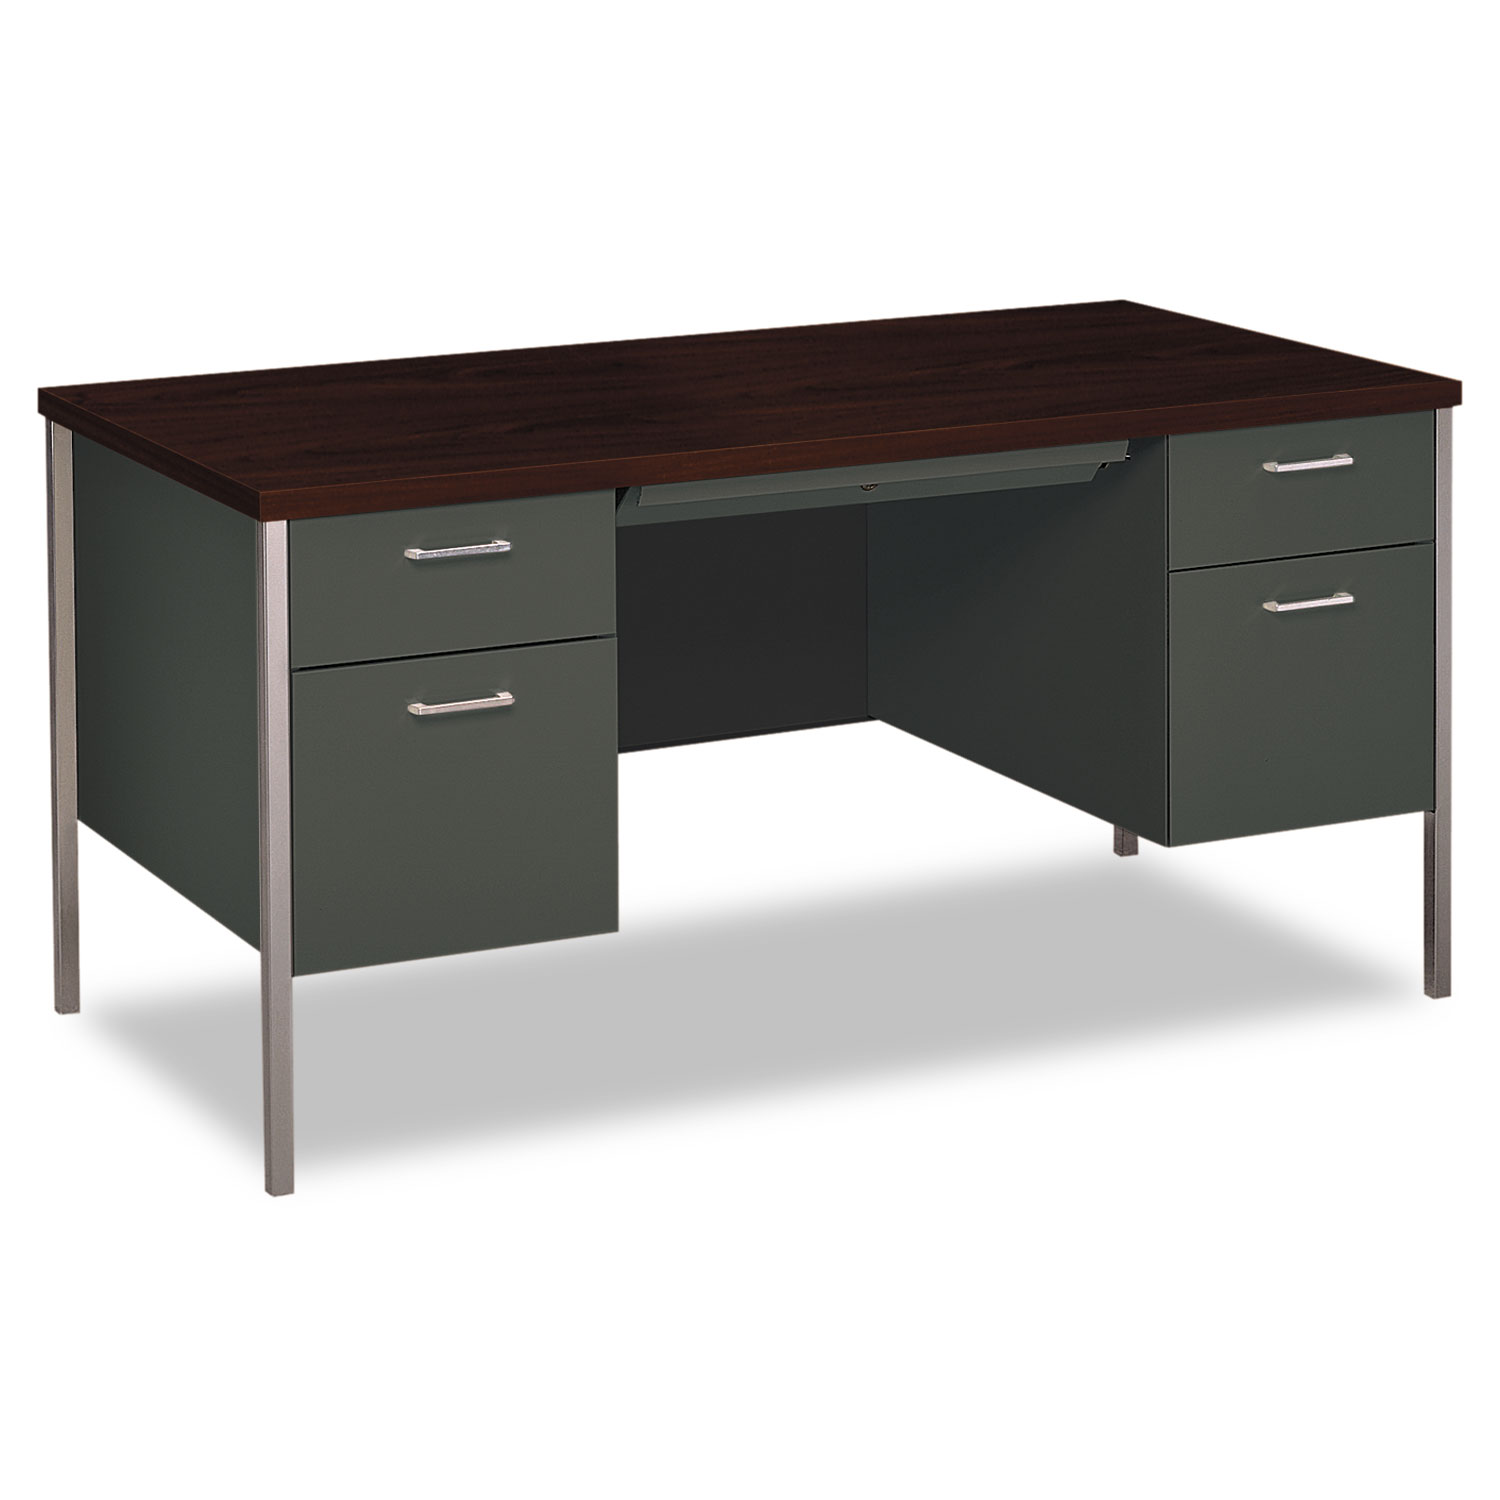  HON H34962.N.S 34000 Series Double Pedestal Desk, 60w x 30d x 29.5h, Mahogany/Charcoal (HON34962NS) 